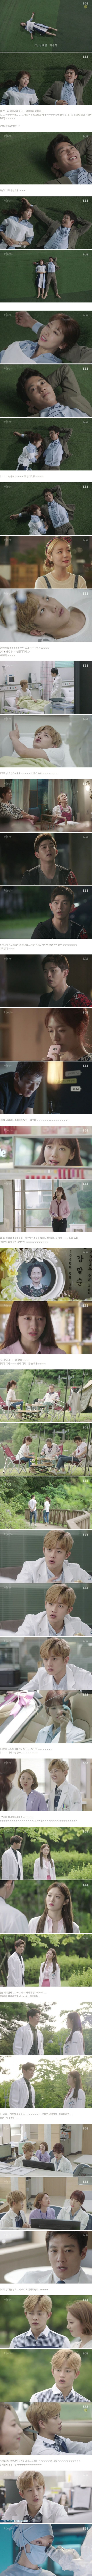 episode 9 captures for the Korean drama 'Doctors'